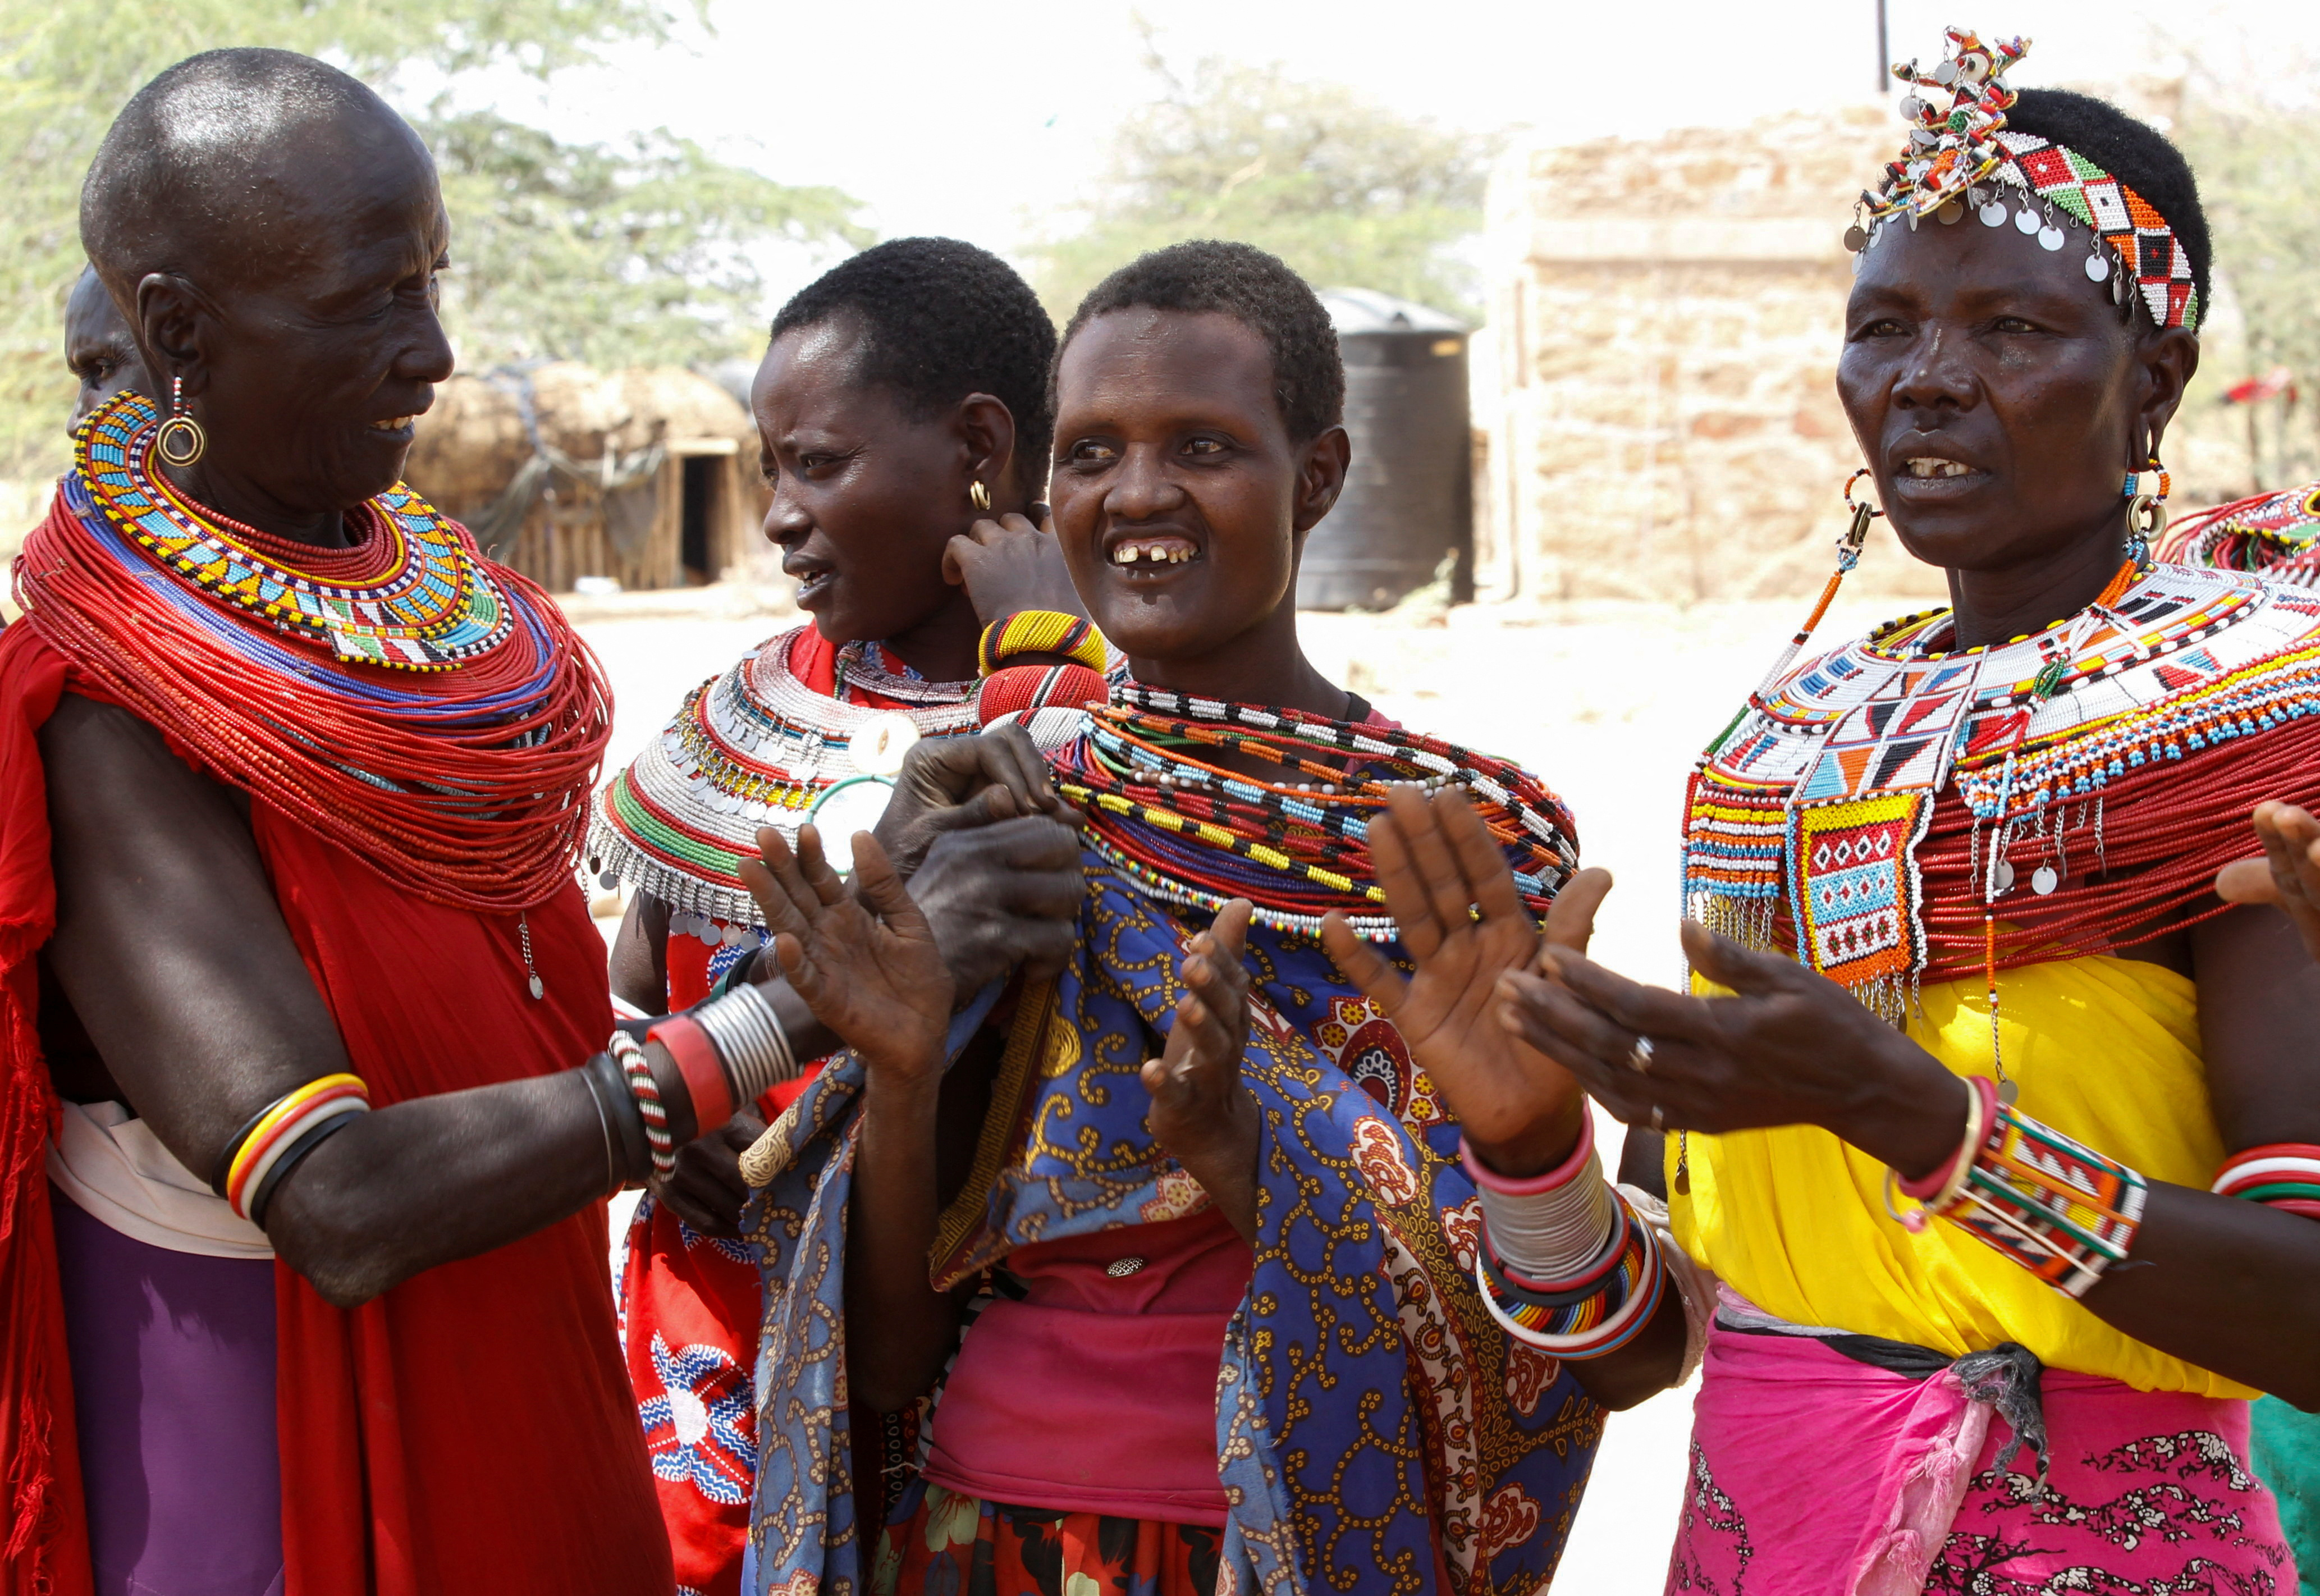 Women-only village in Kenya provides haven for FGM survivors in Samburu